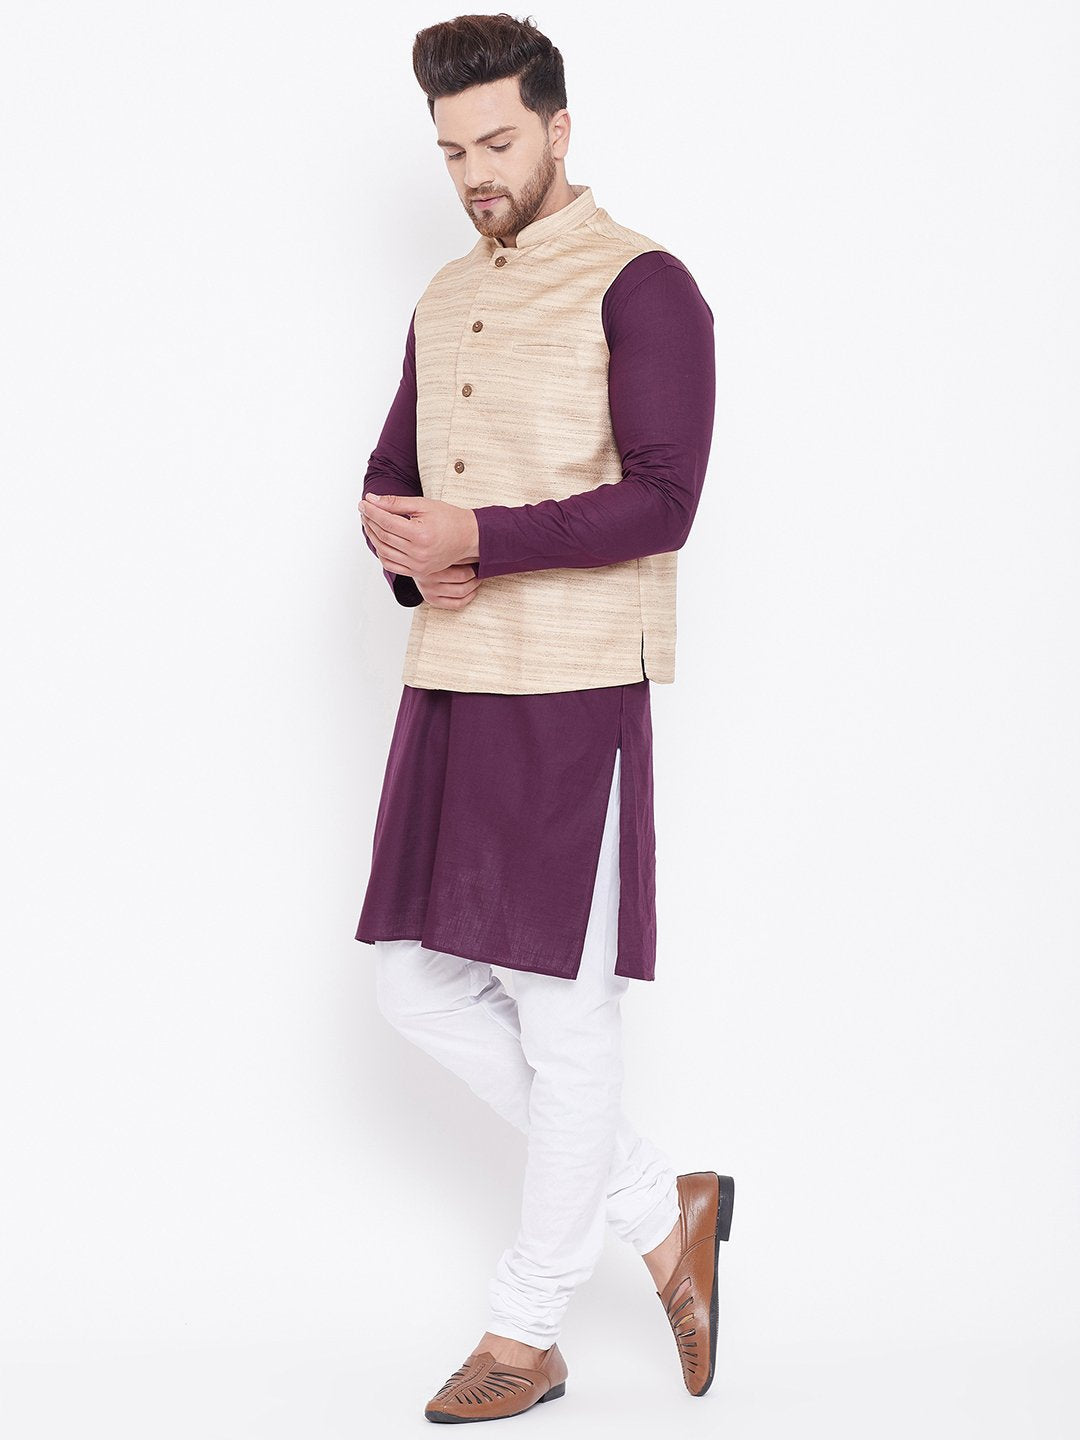 Men's Beige, Purple And White Cotton Blend Jacket, Kurta and Pyjama Set - Vastramay